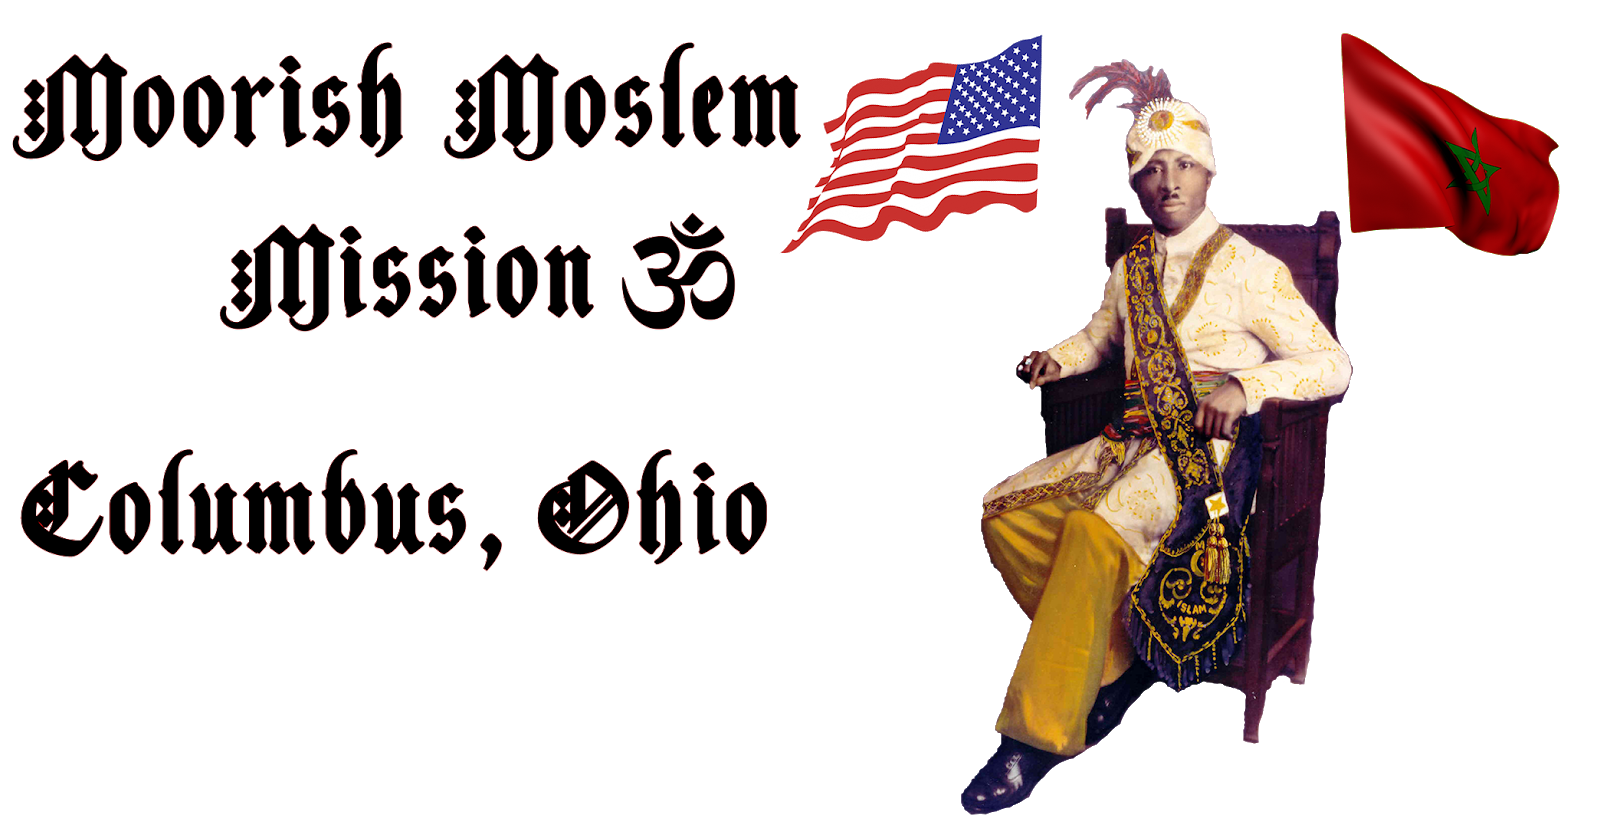 Moorish American Moslem Mission 30 for Columbus Ohio